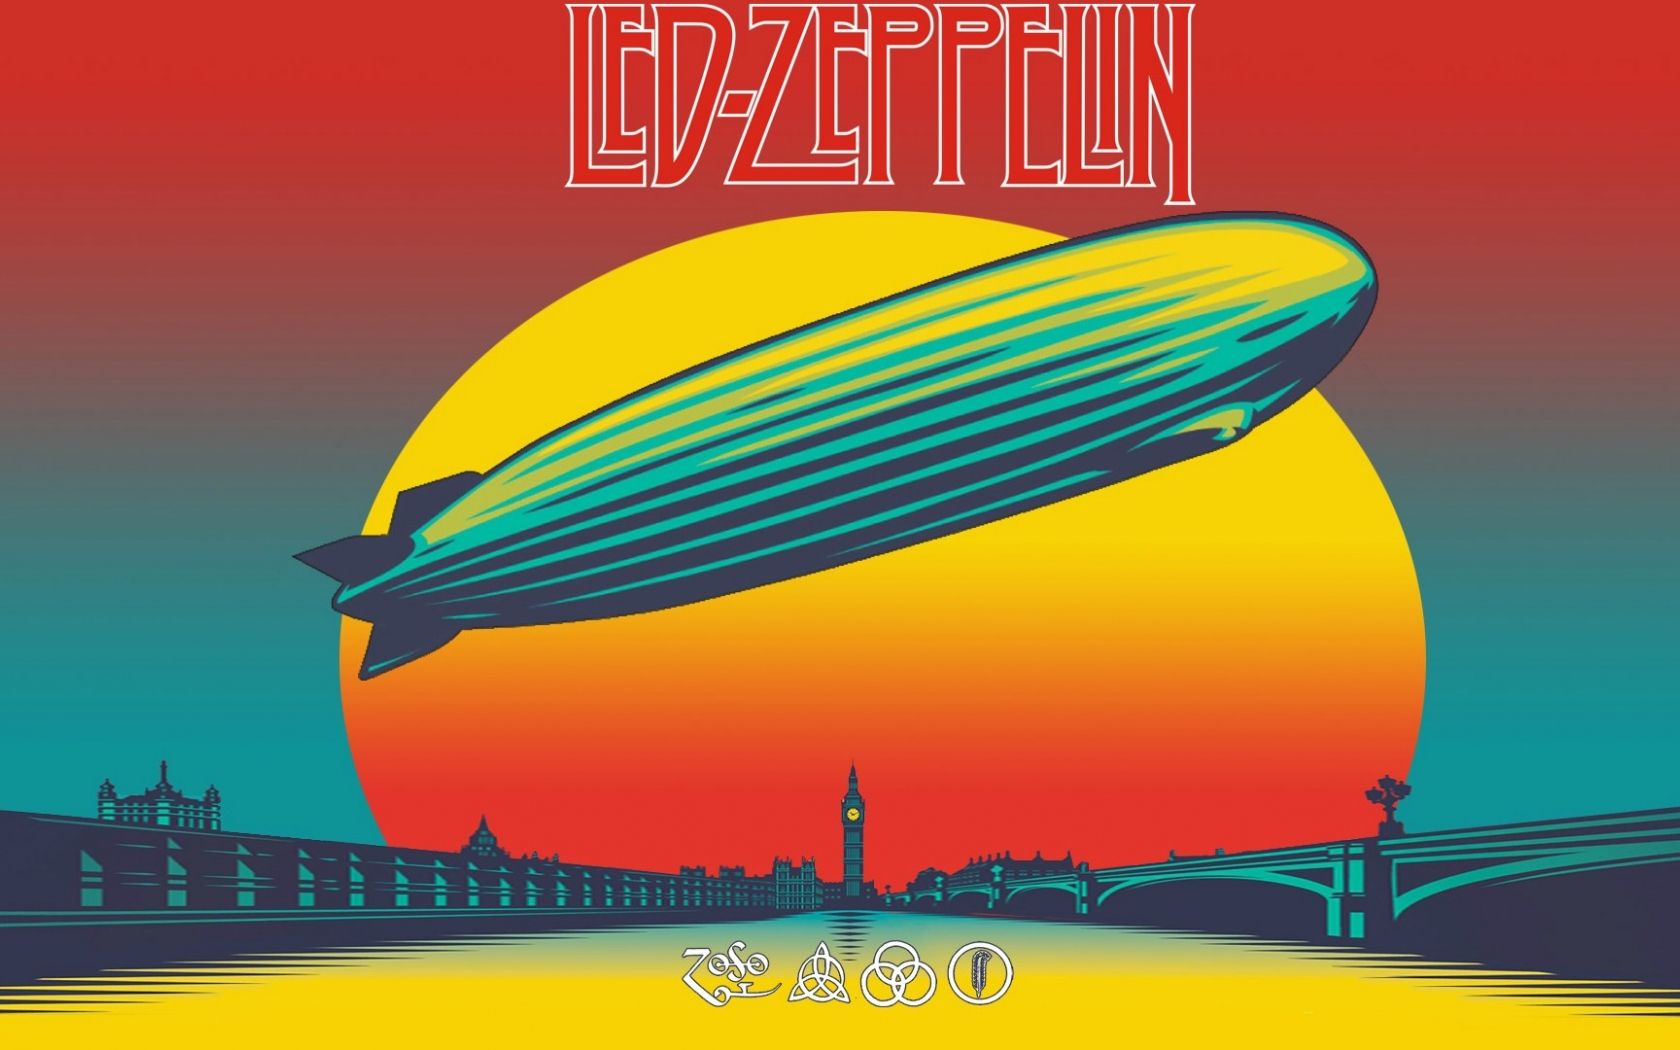 Free download Led Zeppelin album cover Music picture HD wallpaper Picture [1920x1080] for your Desktop, Mobile & Tablet. Explore Album Cover Wallpaper. Classic Rock Album Covers Wallpaper, Rock Album